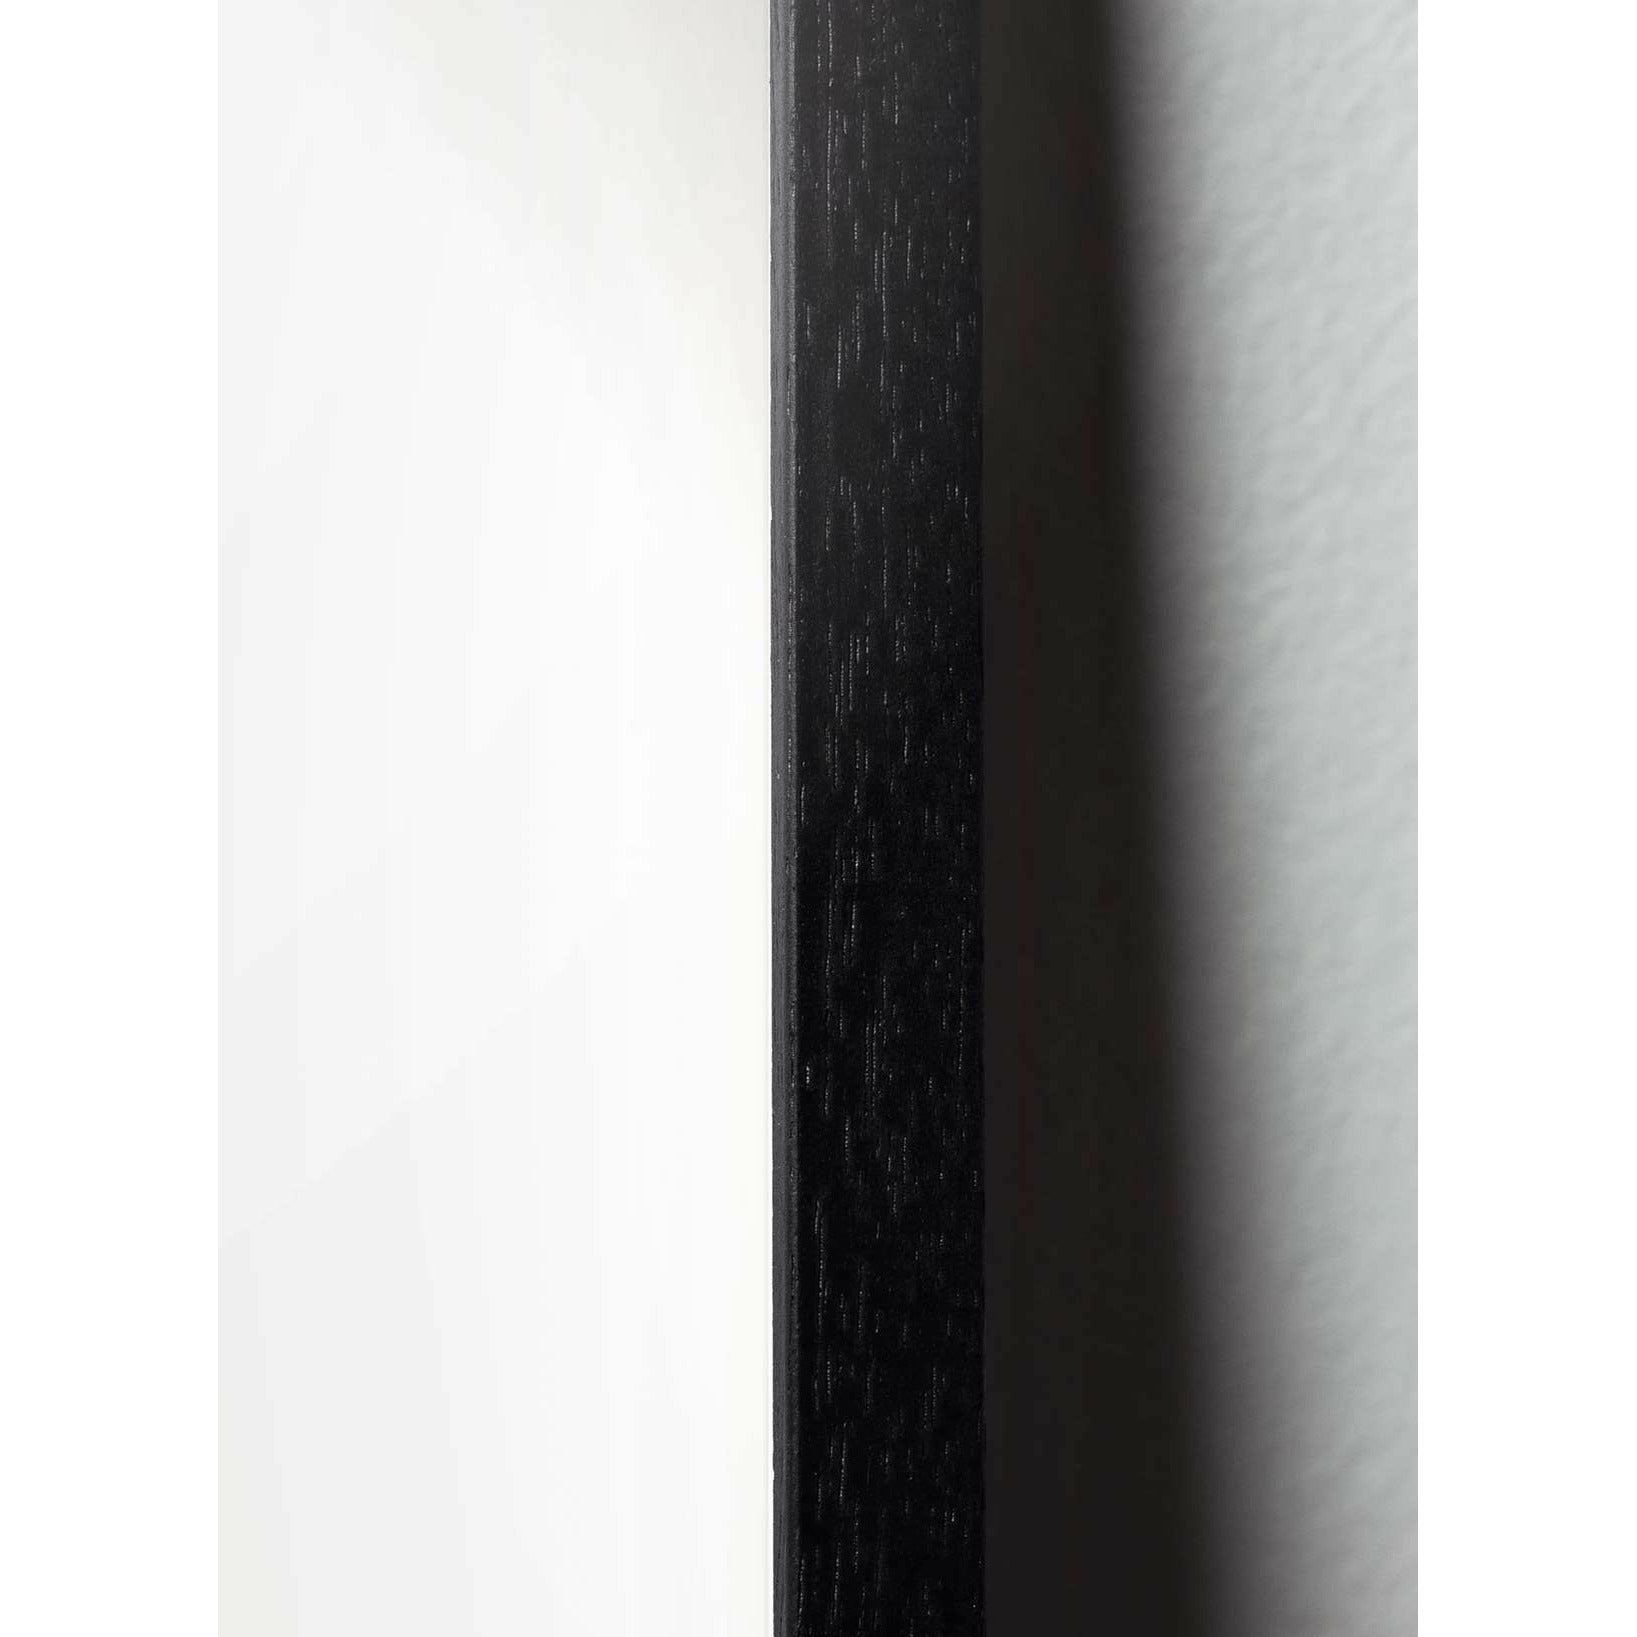 Póster de clip de papel swan de creación, marco en madera lacada negra de 30x40 cm, fondo rosa